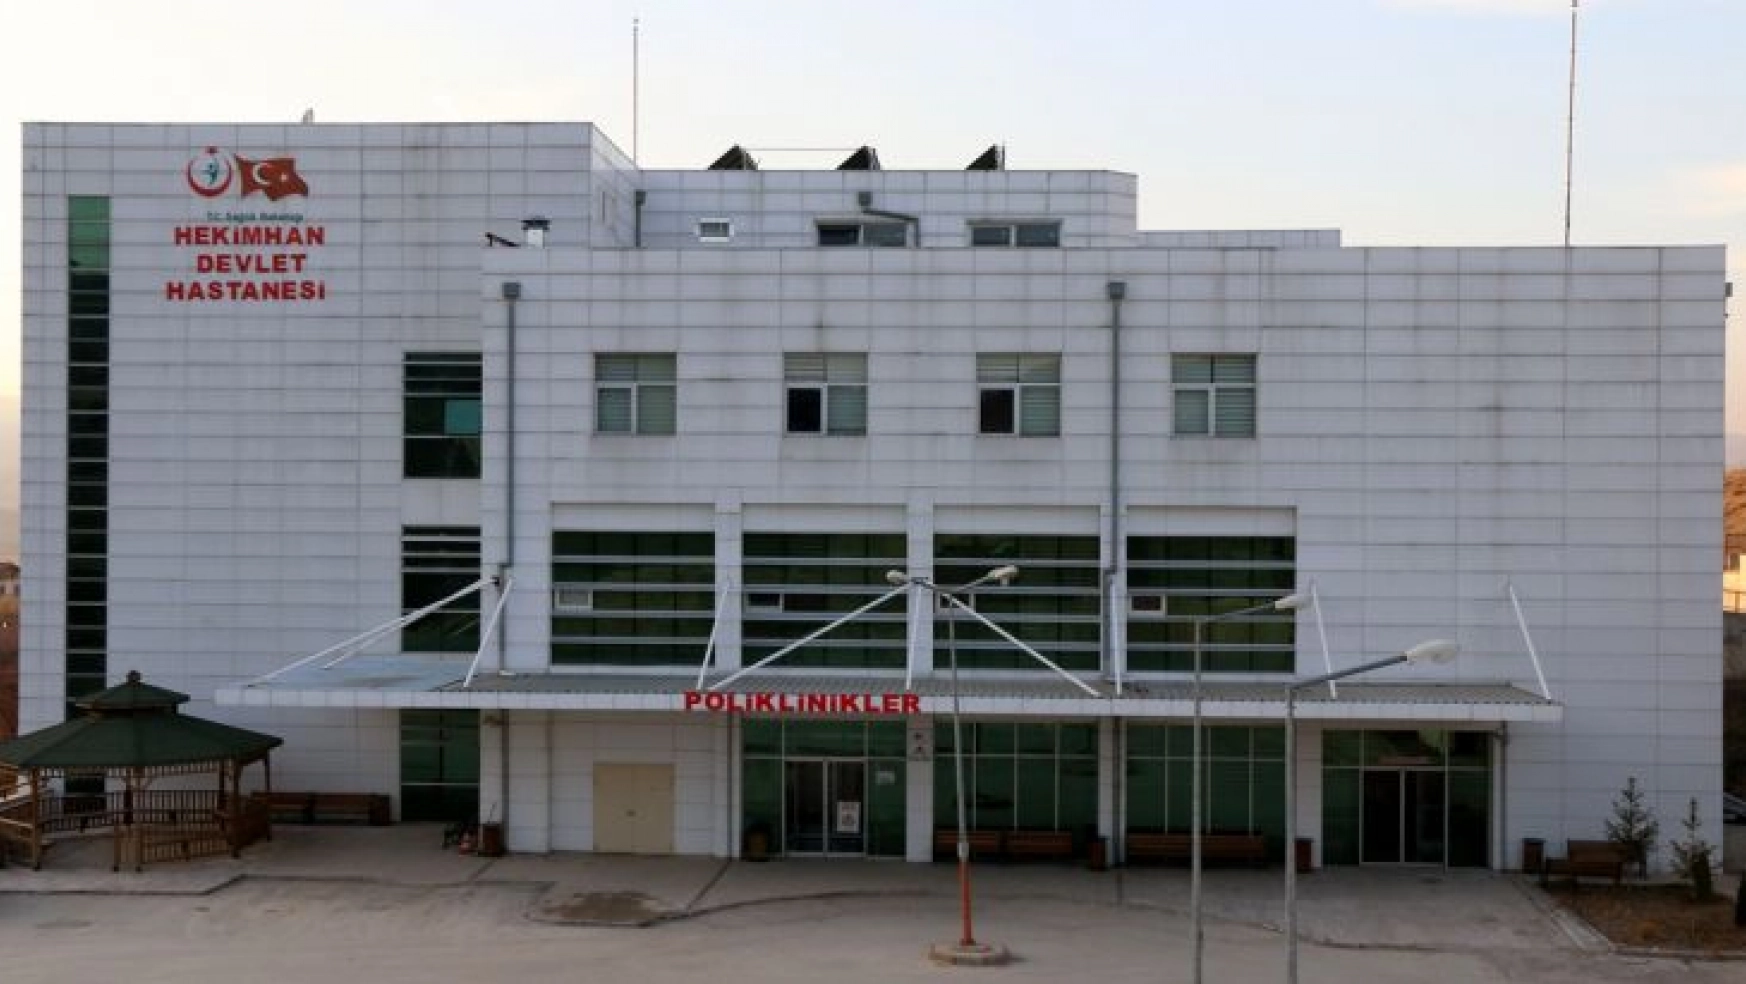 Hekimhan Devlet Hastanesi 'Dijital Hastane' oldu